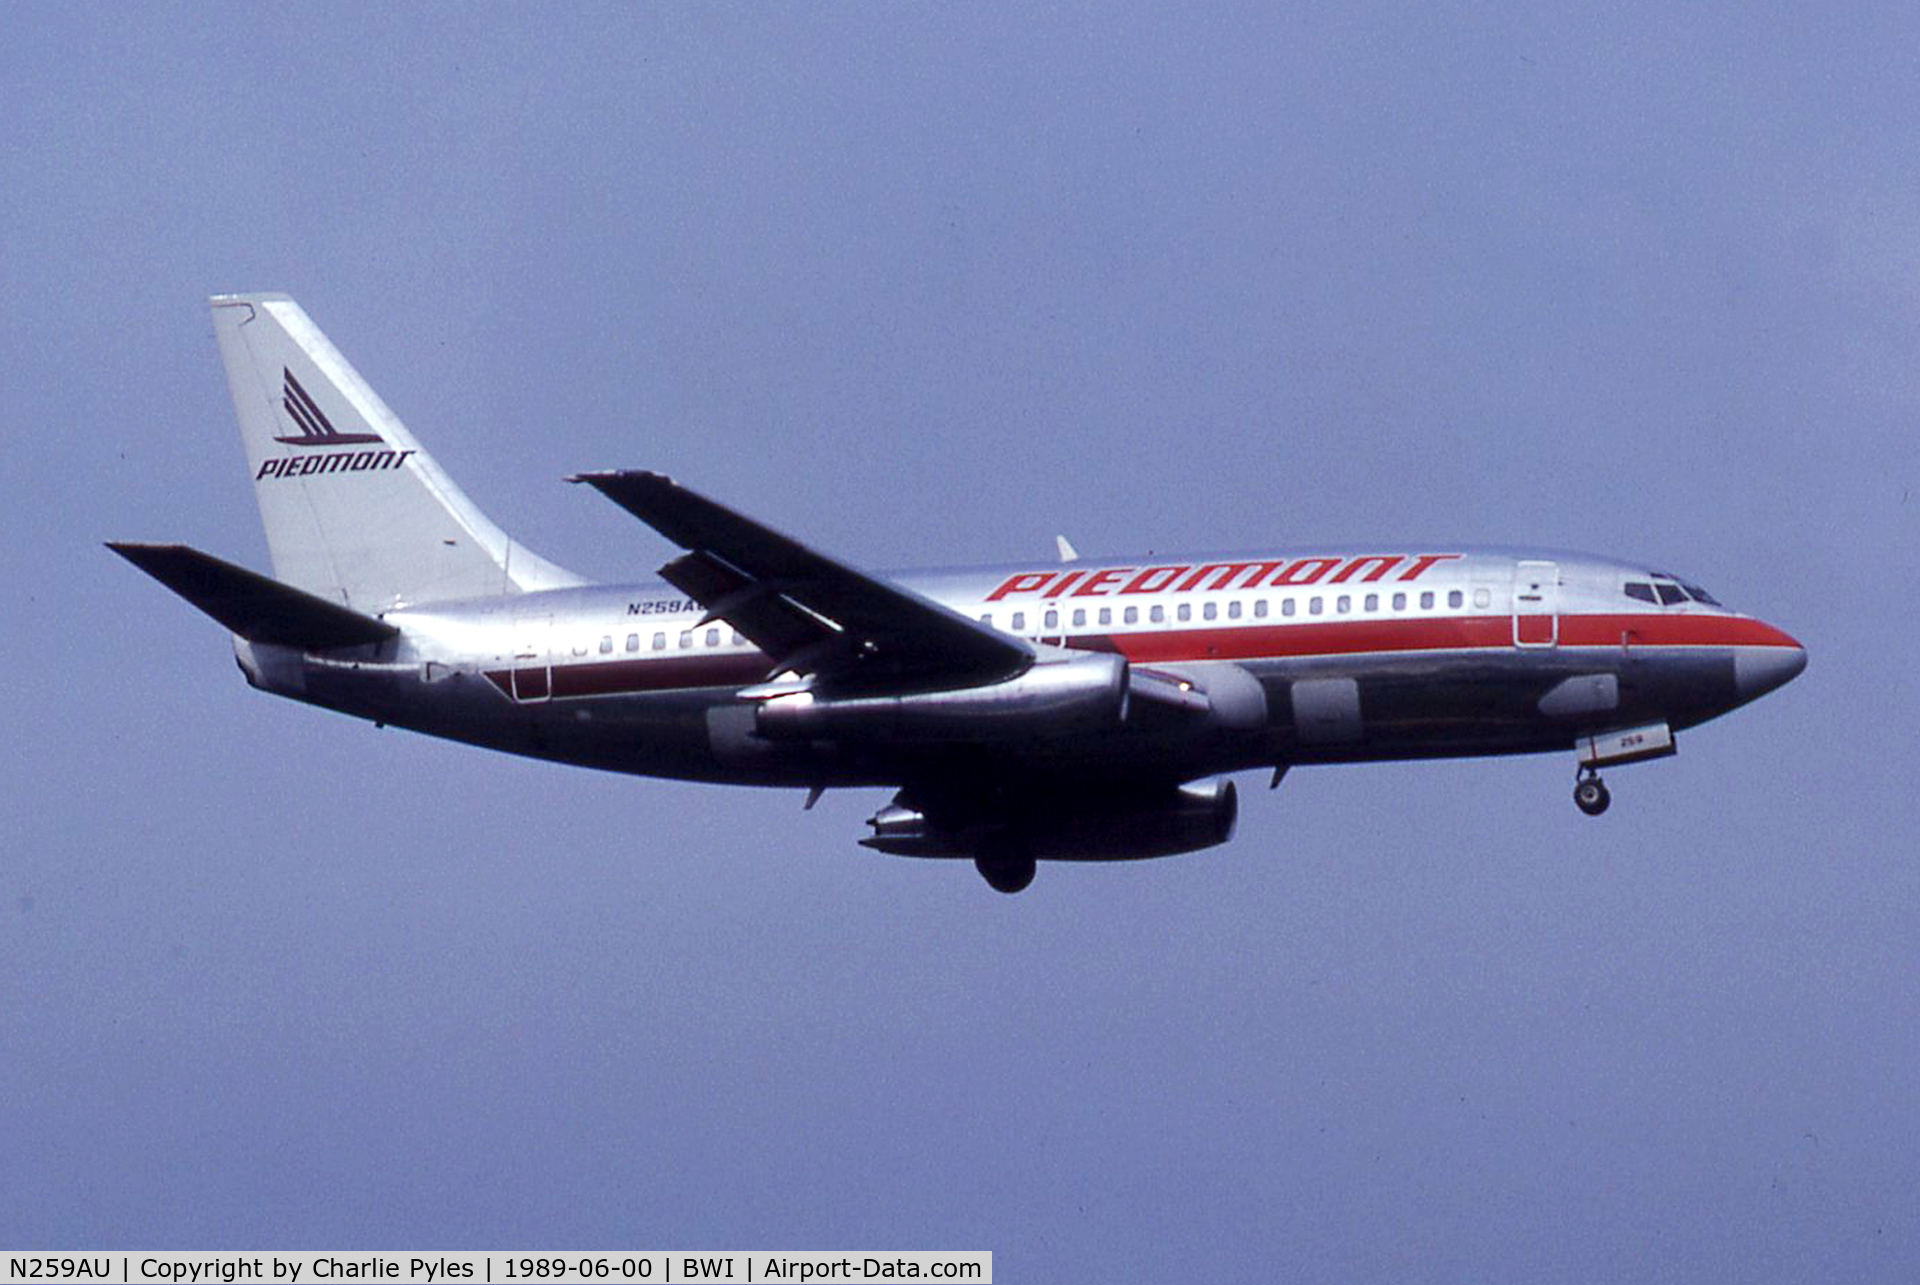 N259AU, 1983 Boeing 737-201 C/N 22806, The merger is gettin' closer